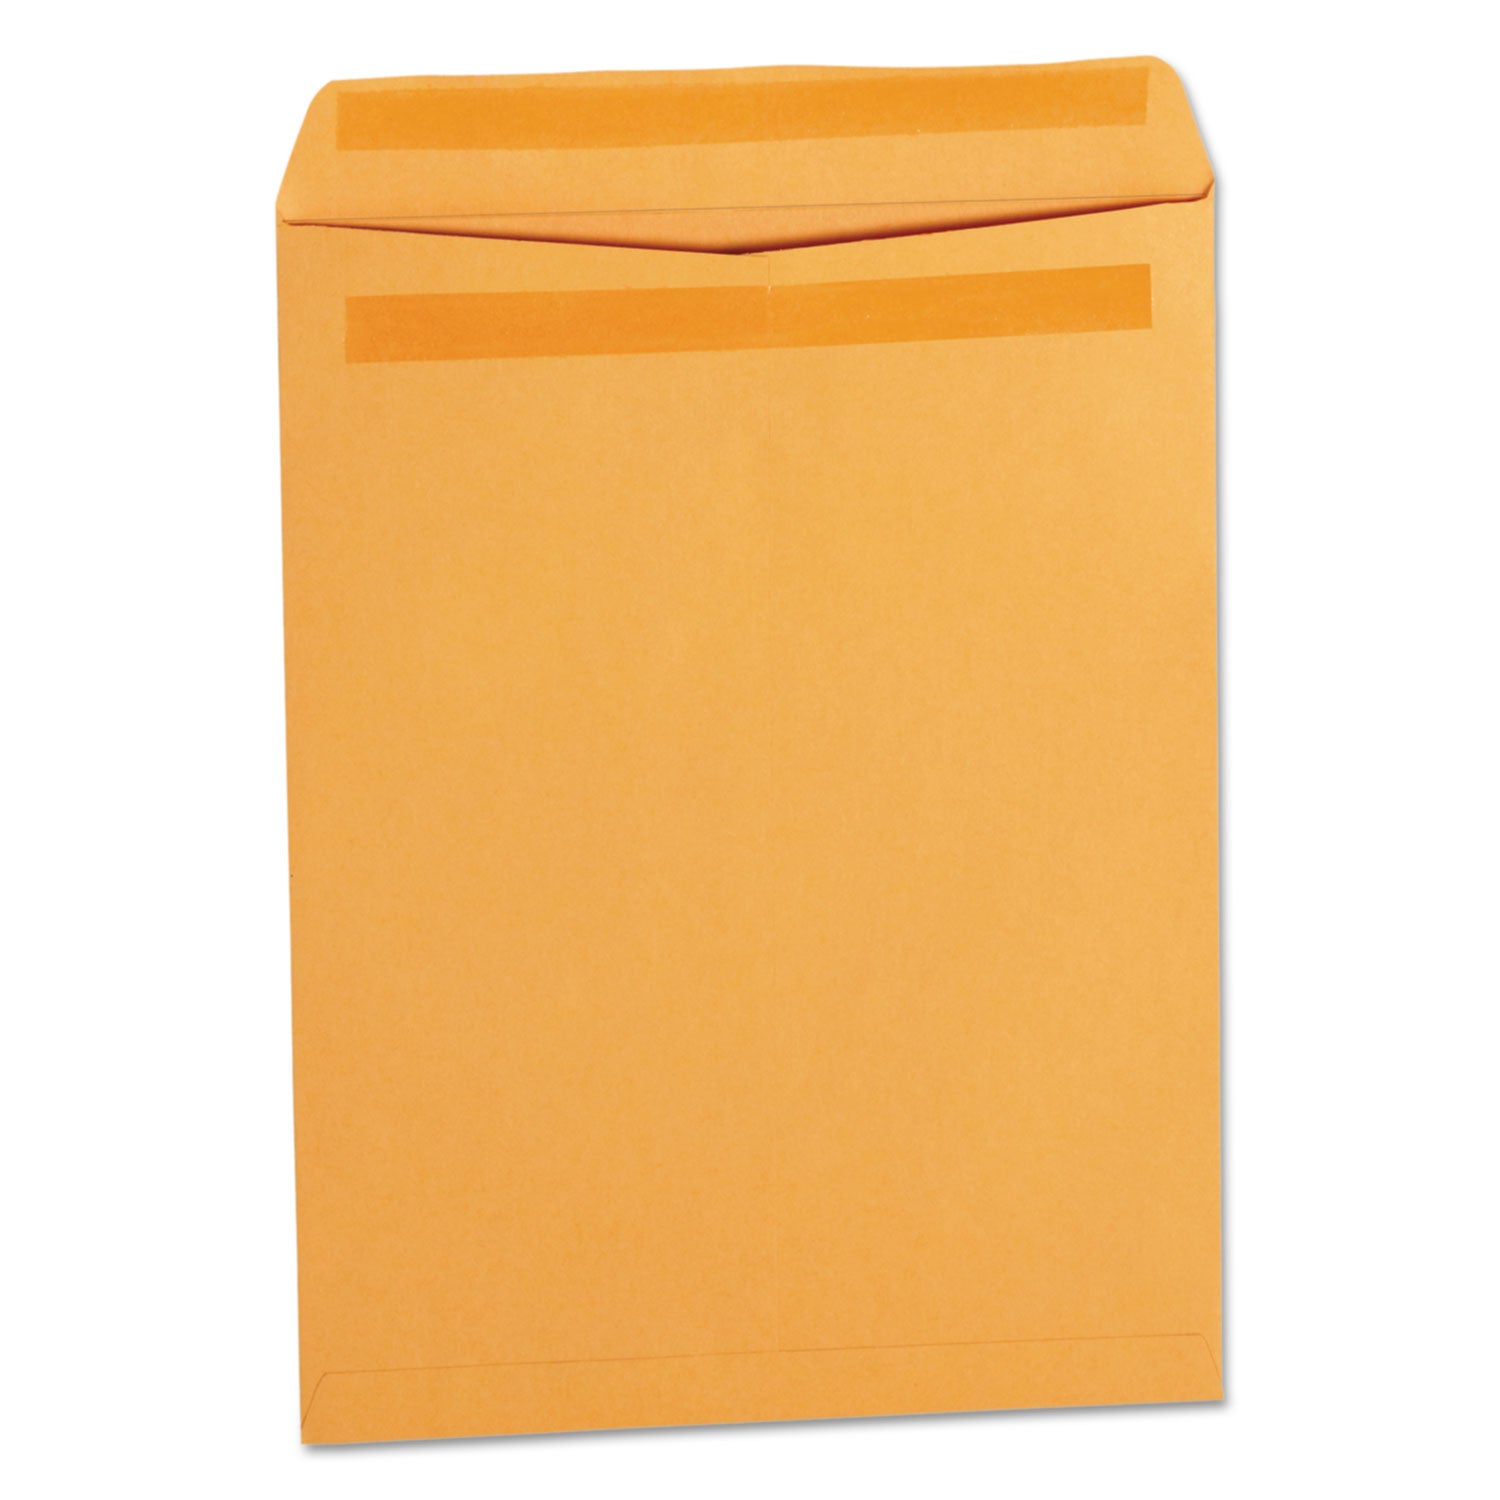 Self-Stick Open End Catalog Envelope, #12 1/2, Square Flap, Self-Adhesive Closure, 9.5 x 12.5, Brown Kraft, 250/Box - 